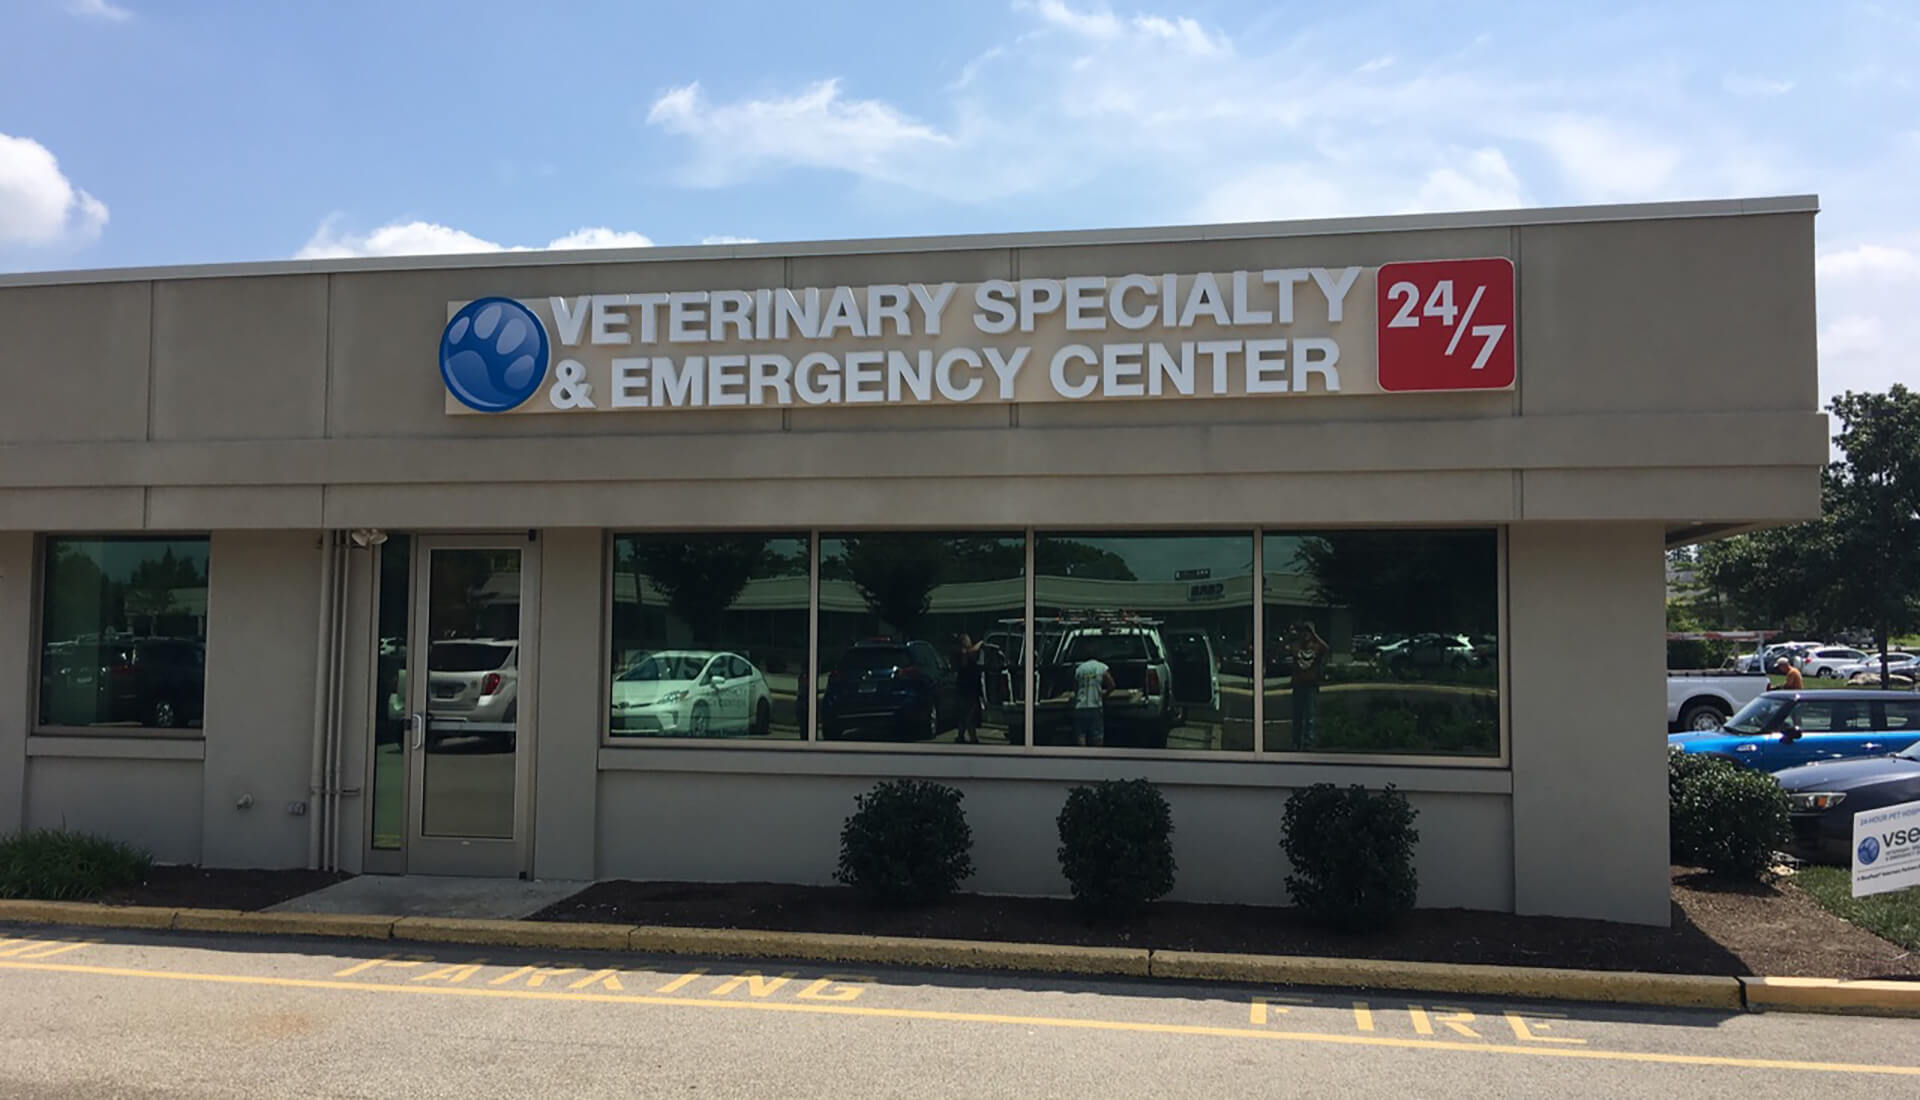 Veterinary Specialty & Emergency Center in Conshohocken, PA pet hospital exterior